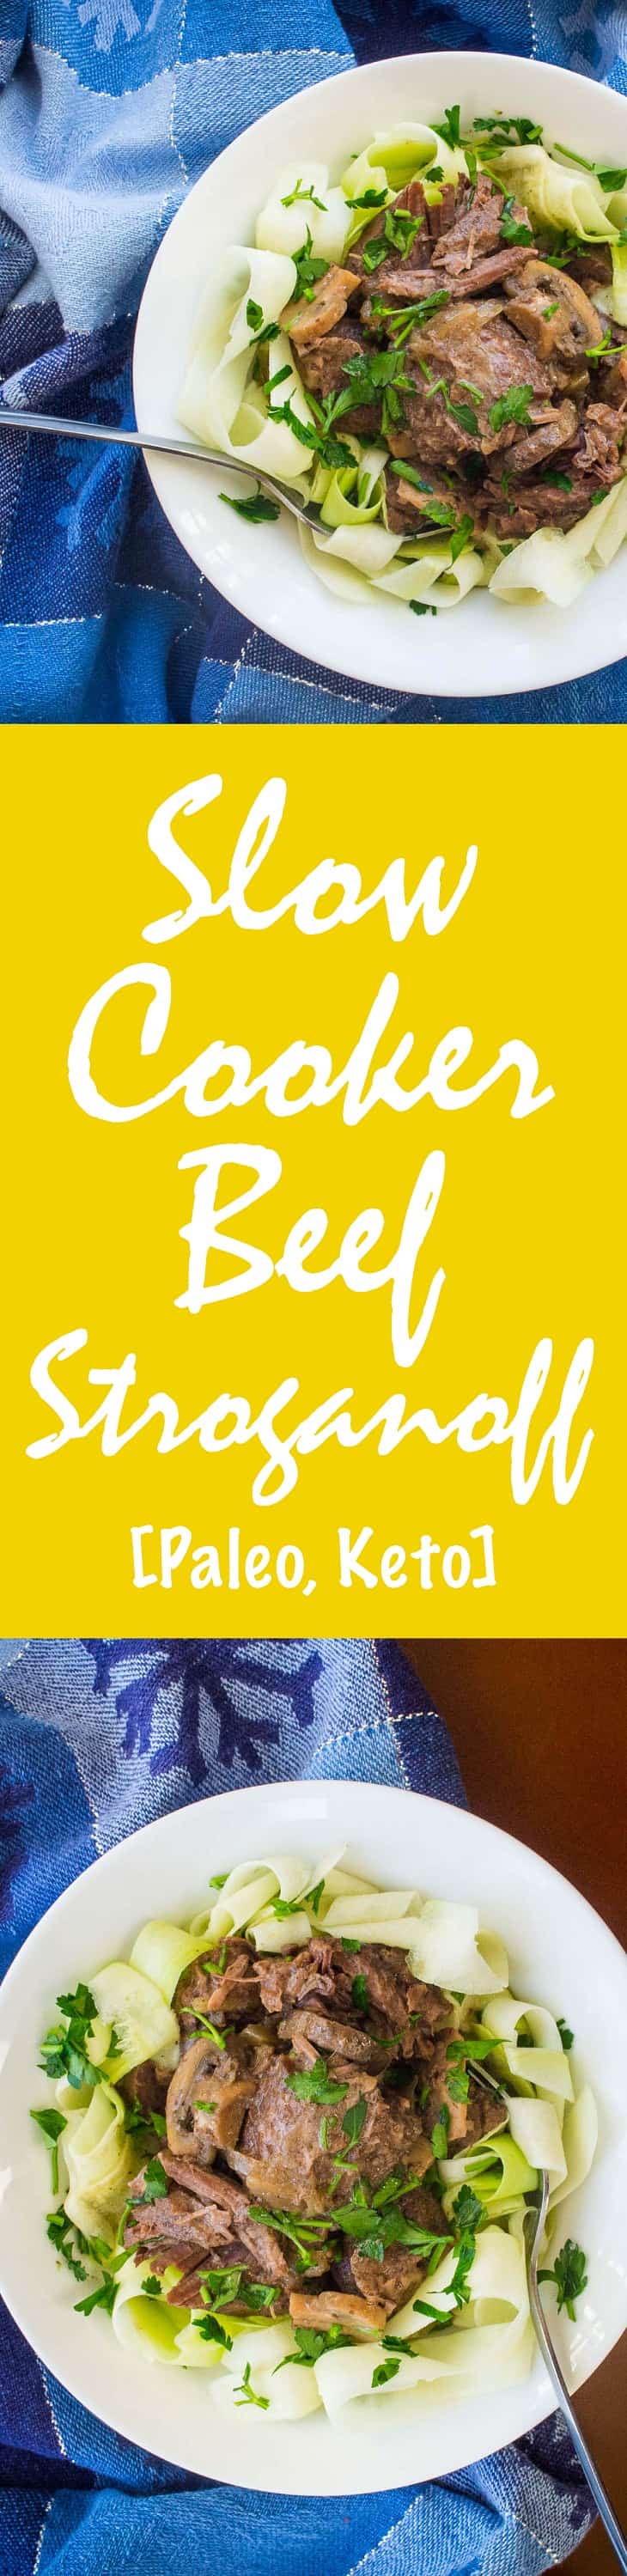 Slow Cooker Beef Stroganoff Recipe [Paleo, Keto] #paleo #keto - https://paleoflourish.com/slow-cooker-beef-stroganoff-recipe